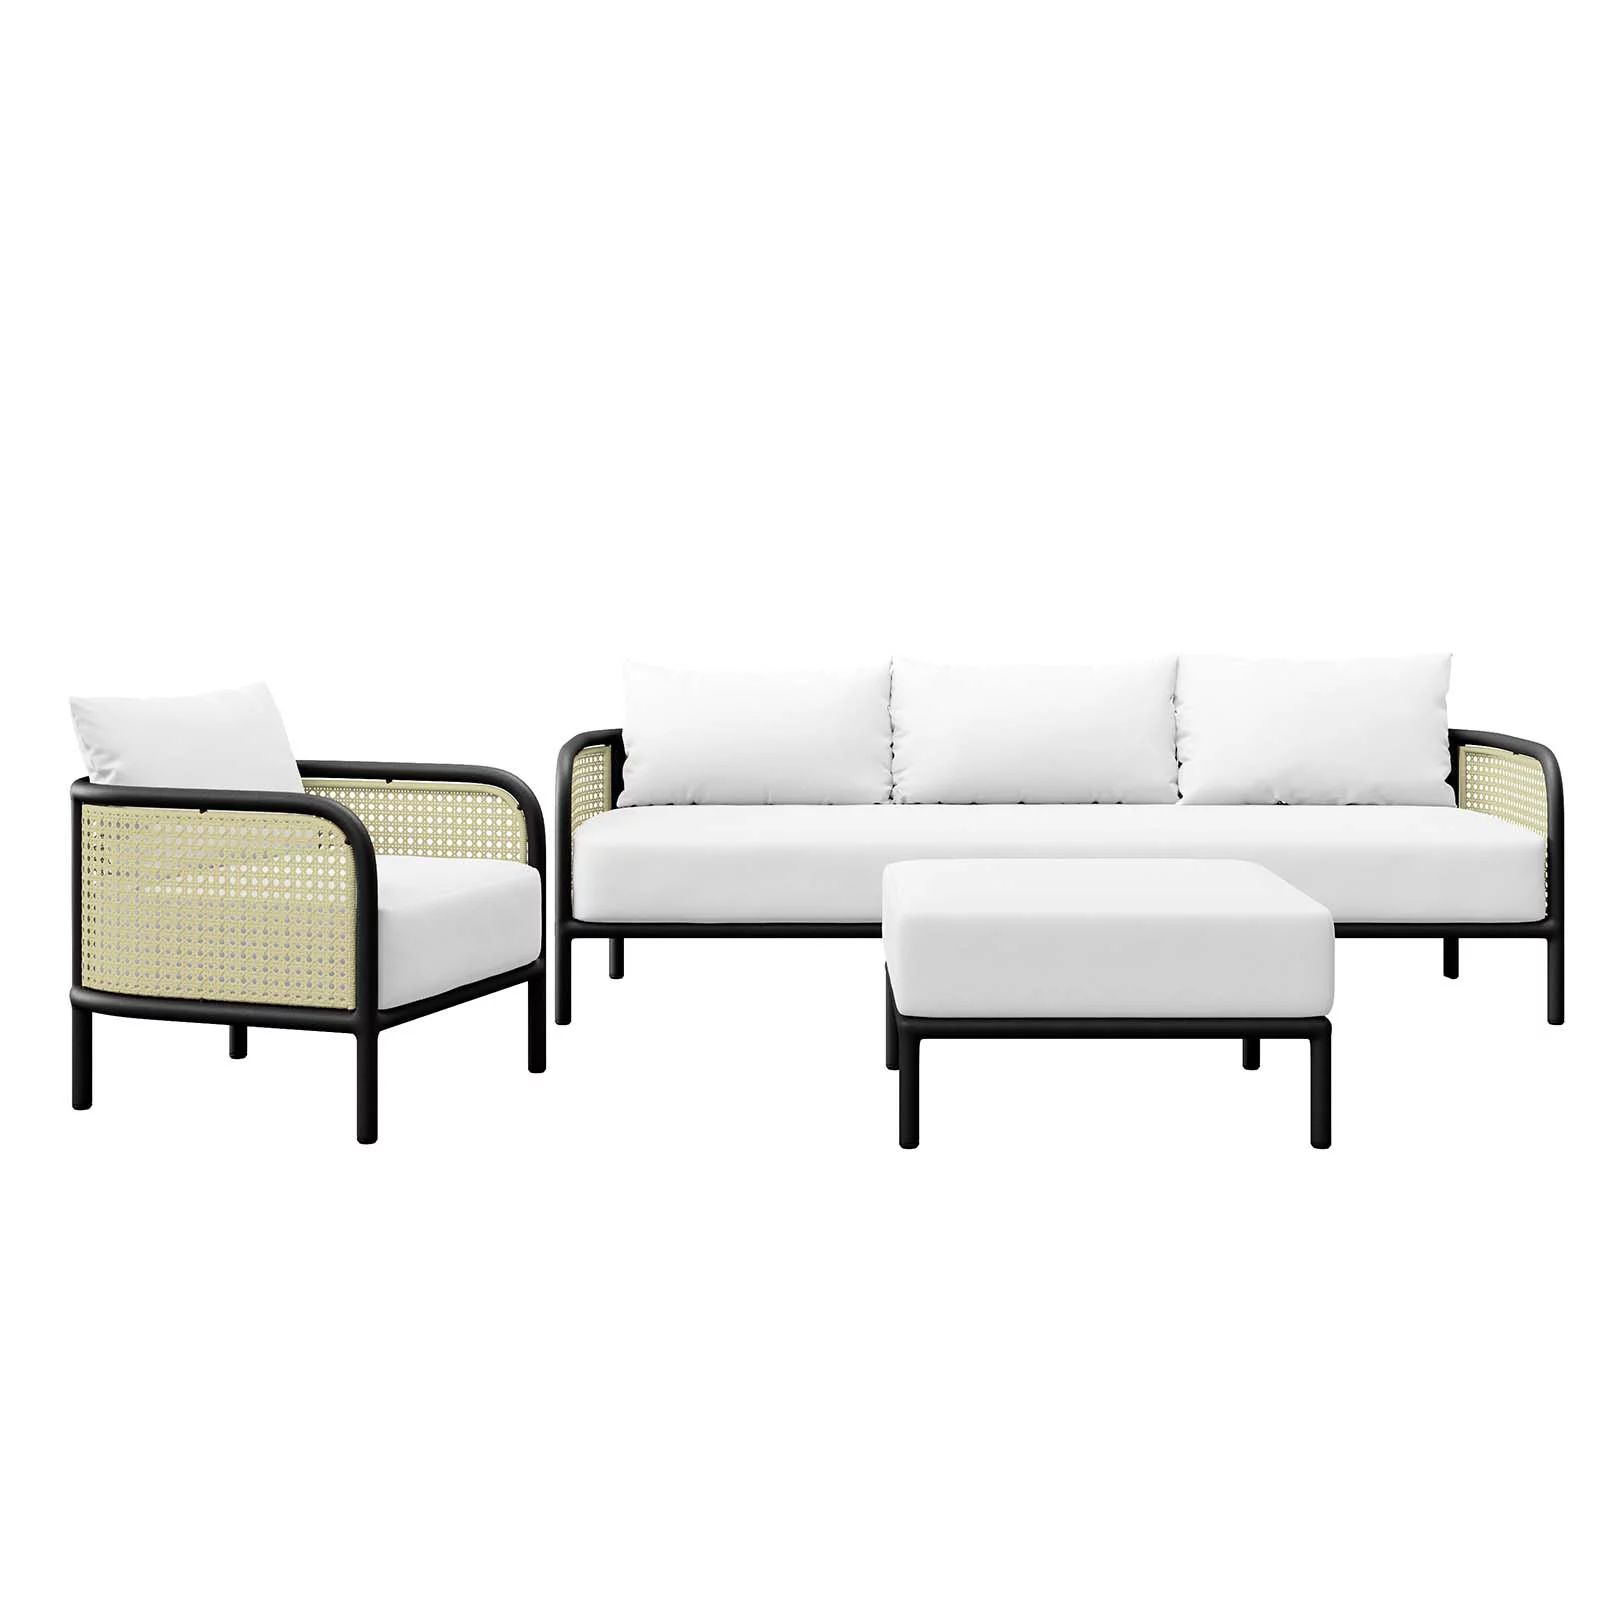 Modway Hanalei 3-Piece Outdoor Patio Furniture Set in Ivory White | Walmart (US)